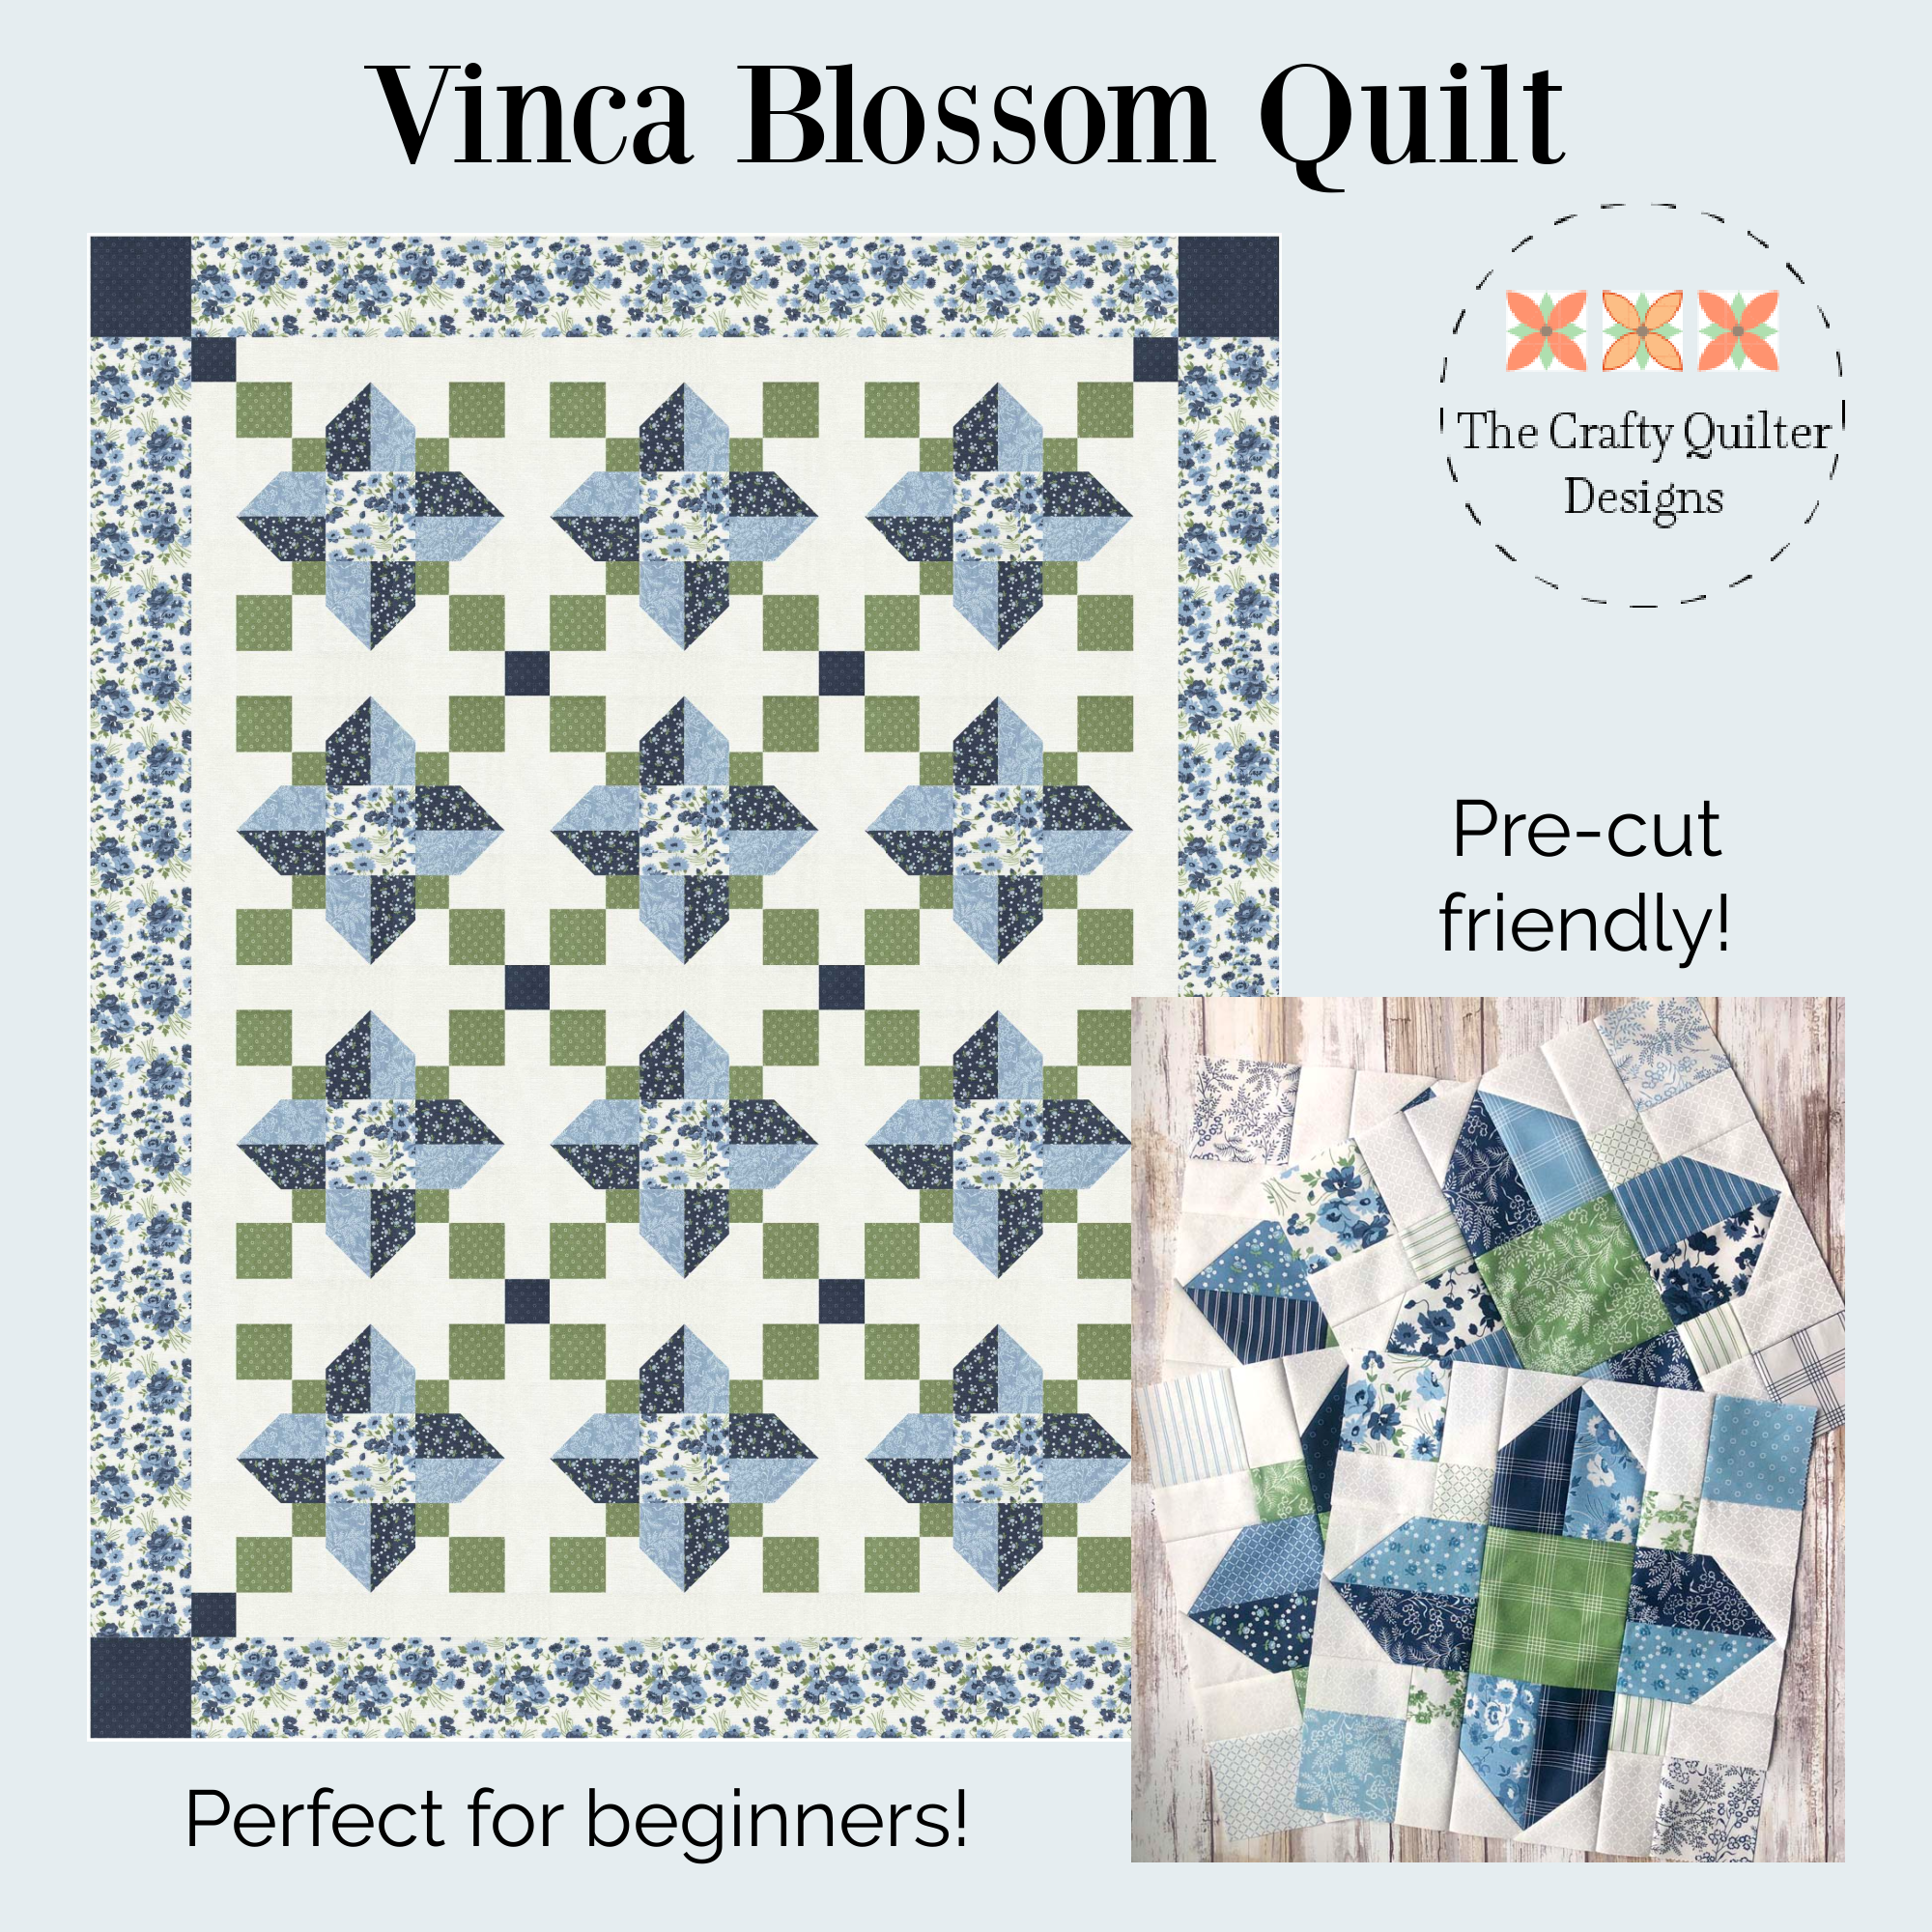 Vinca Blossom Quilt pattern release!